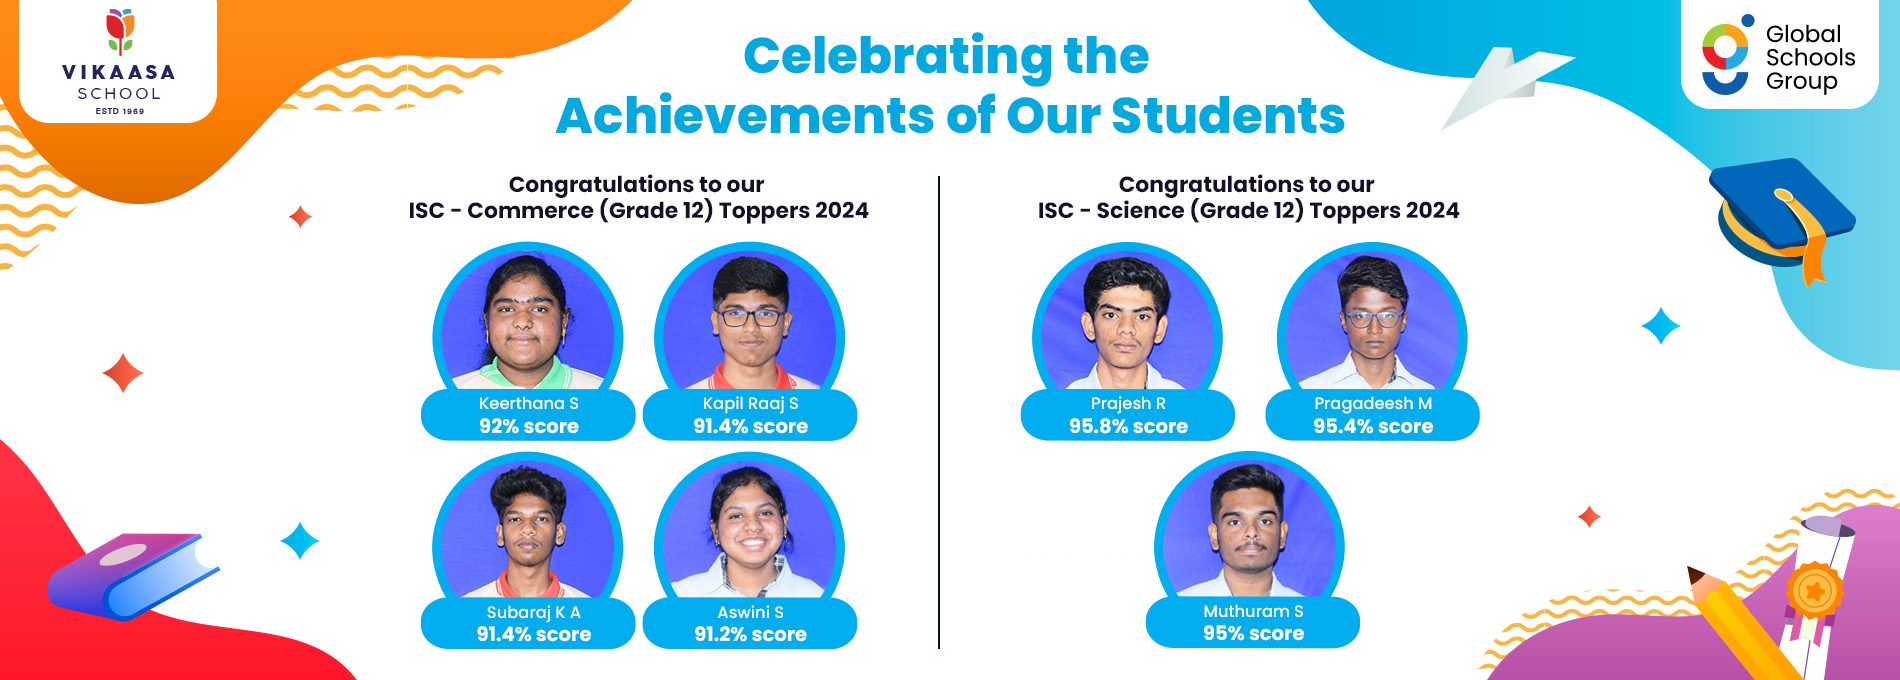 Celebrating the Achievements of Our Students | Cambridge Schools in Madurai